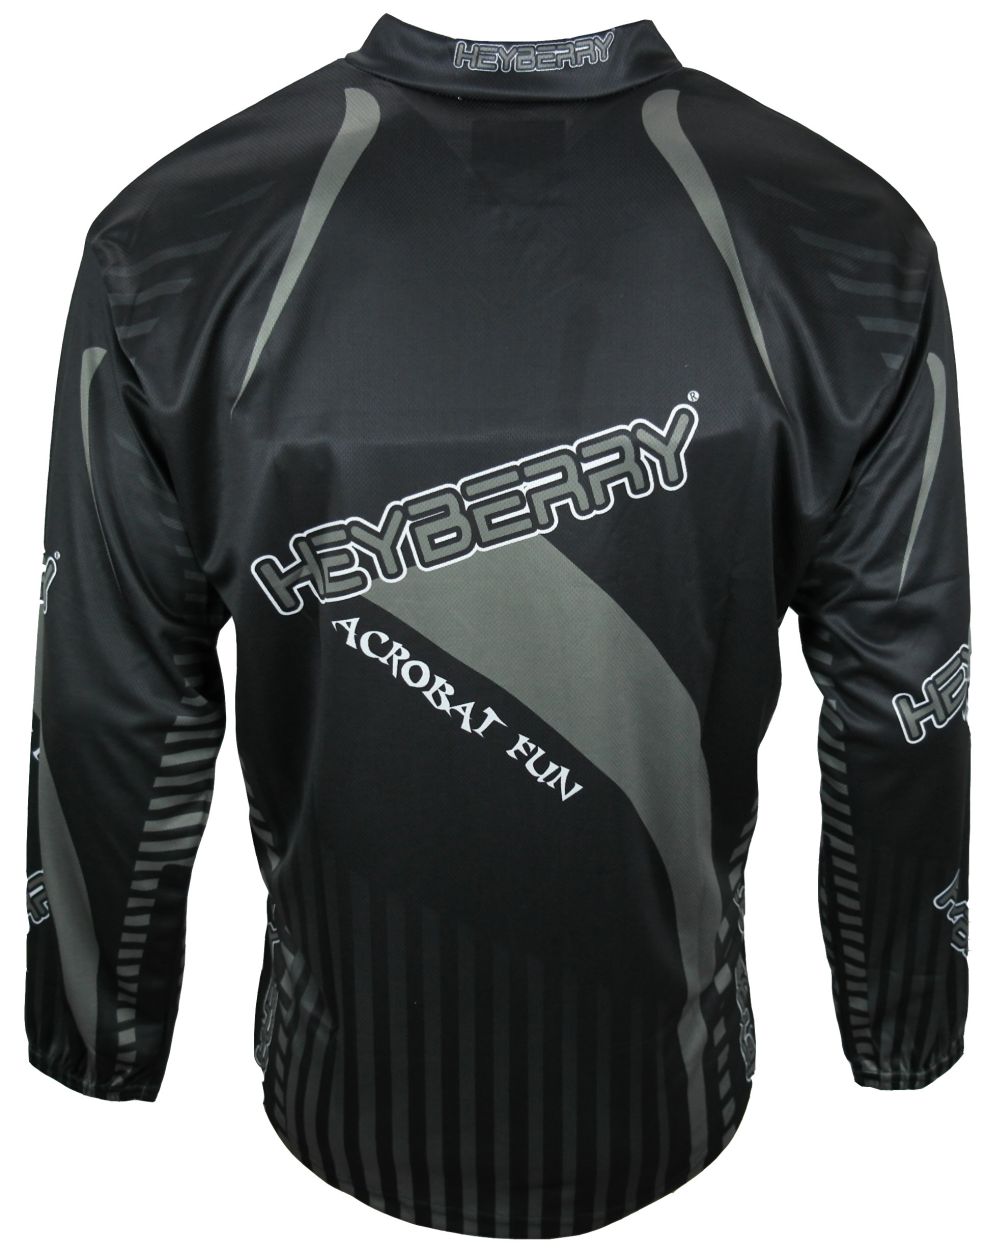 Heyberry Motocross MX Shirt Jersey Trikot schwarz grau Größe M L XL XXL